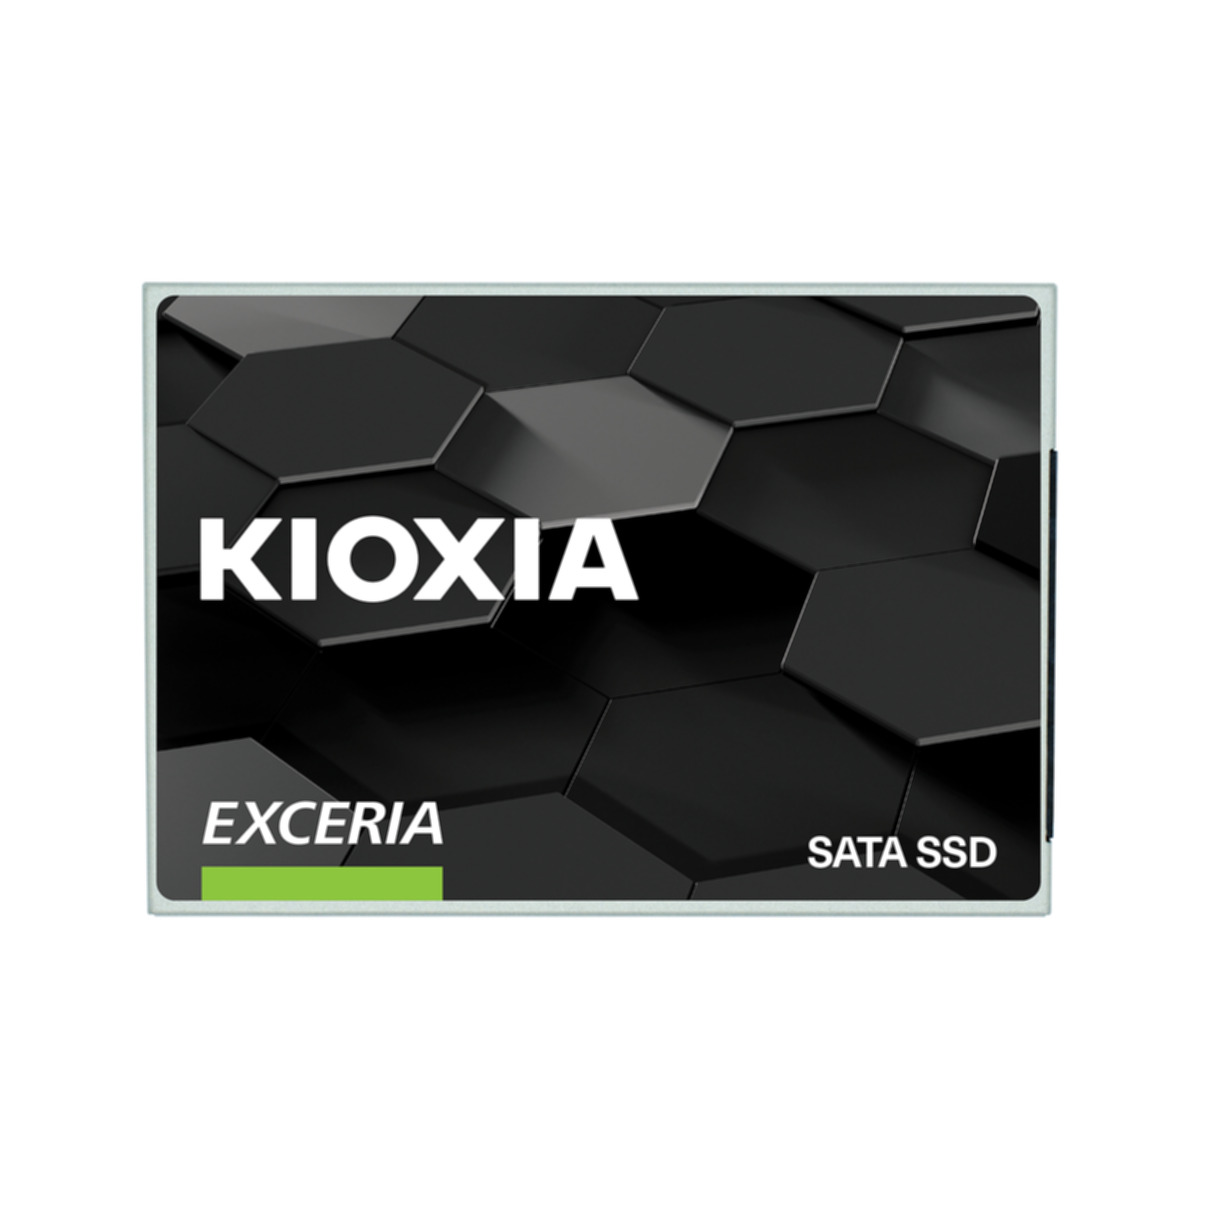 SSD KIOXIA Exceria 480GB LTC10Z480GG8 2,5 SATA3